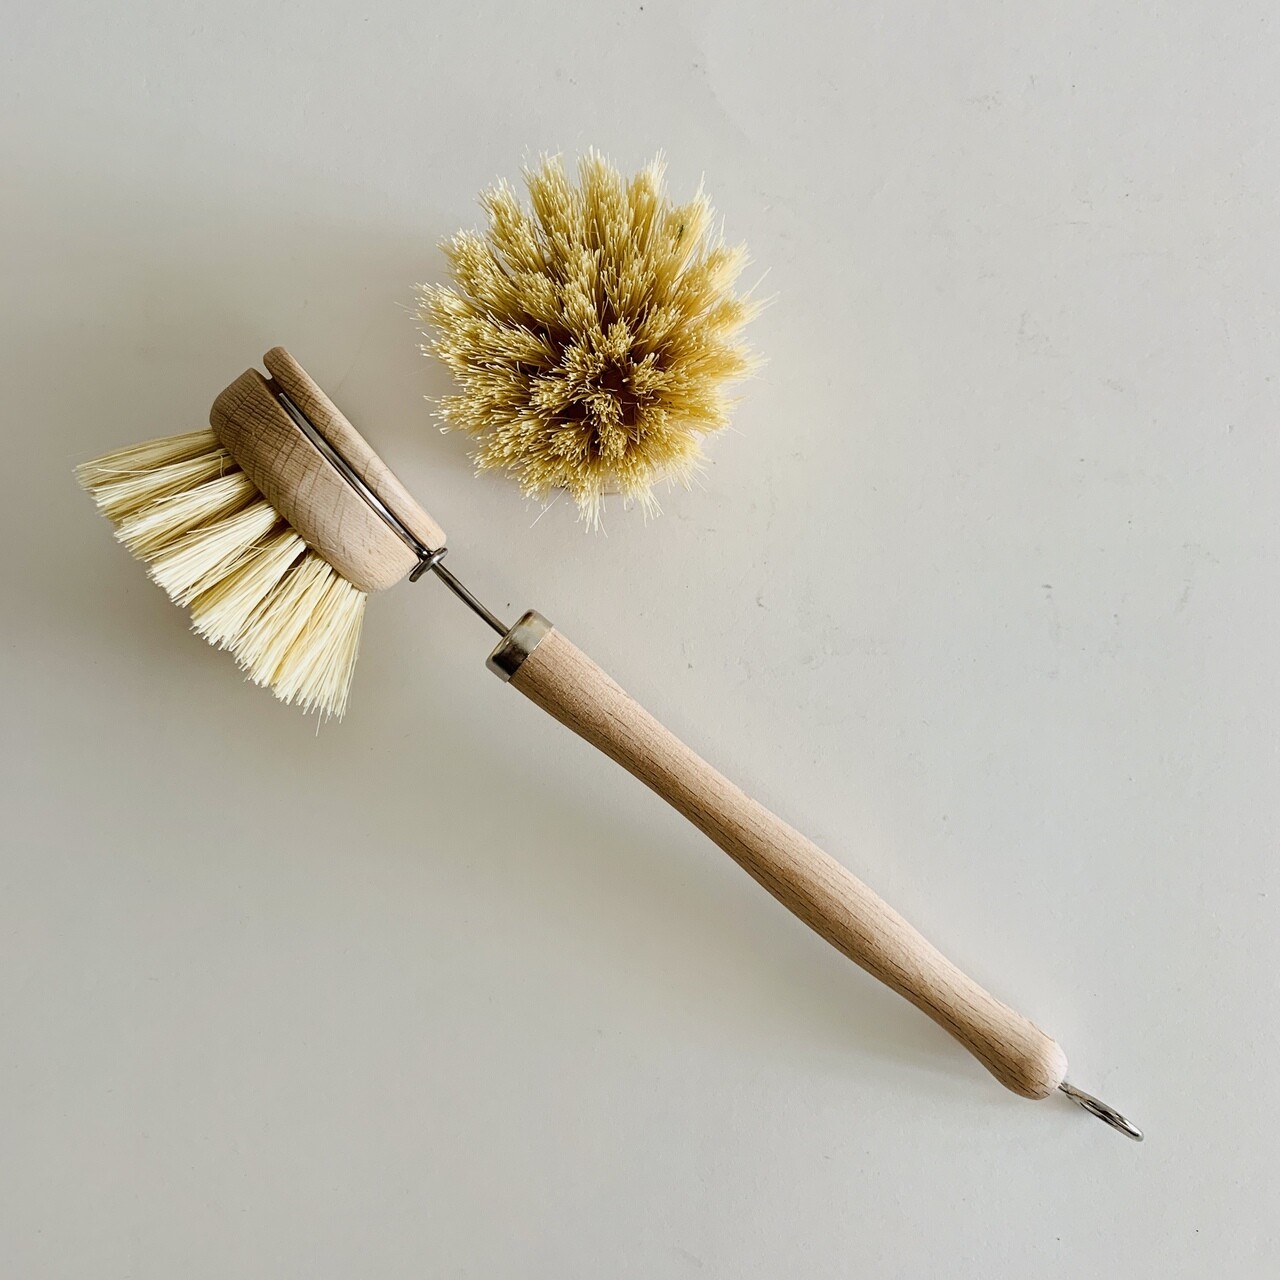 Dish Brush - Long Handle & Replacement Brush Heads